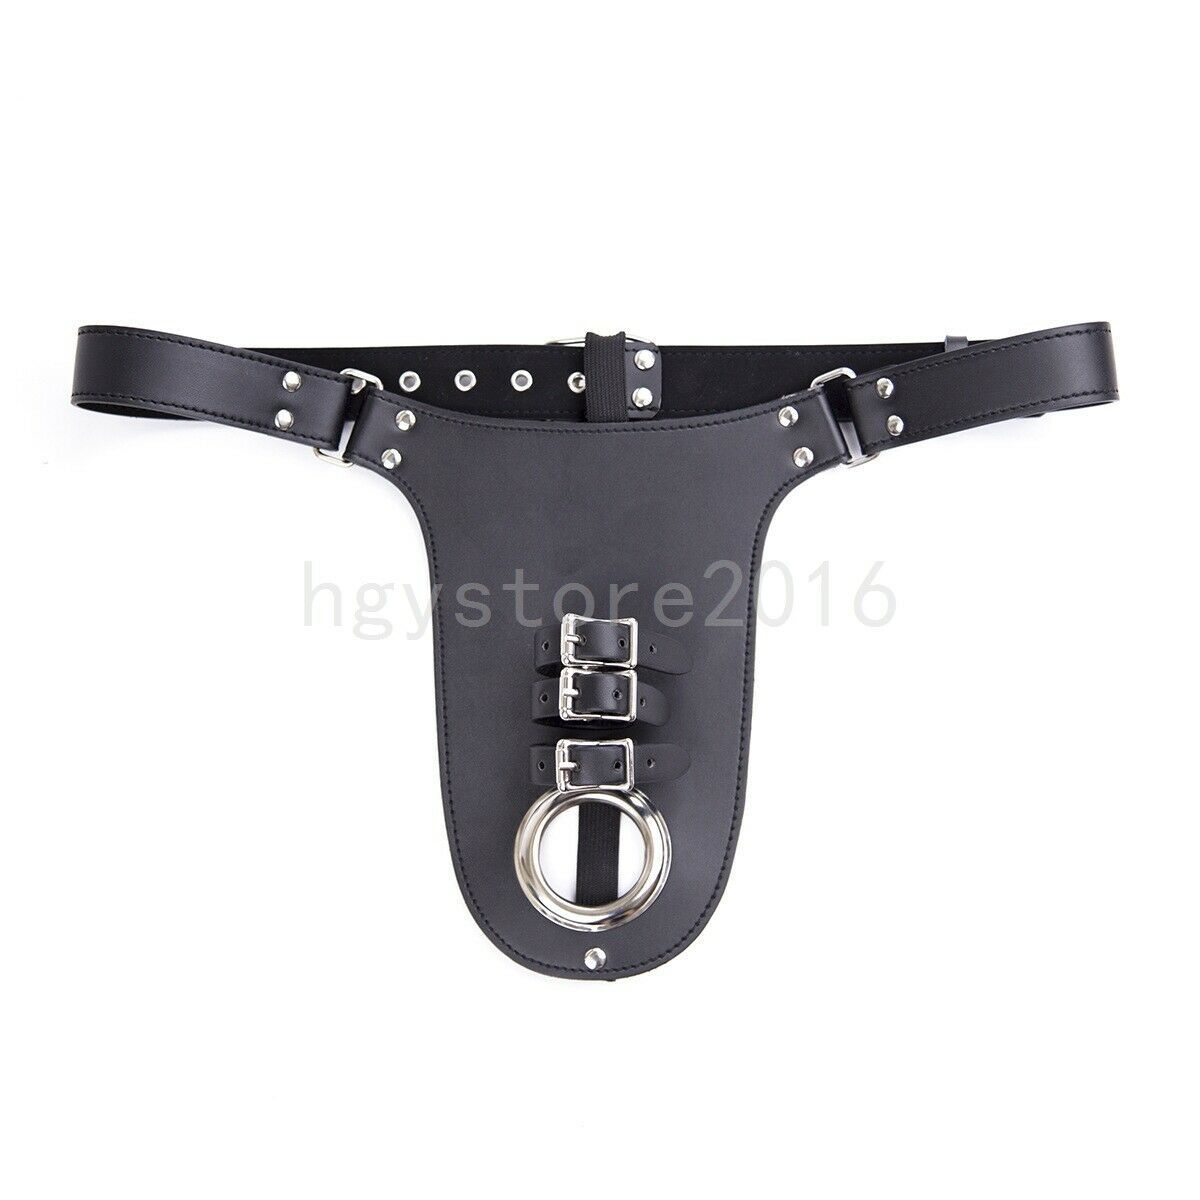 PU Leather Women's locking Chastity Belt restraints Adjustable Female Panty new